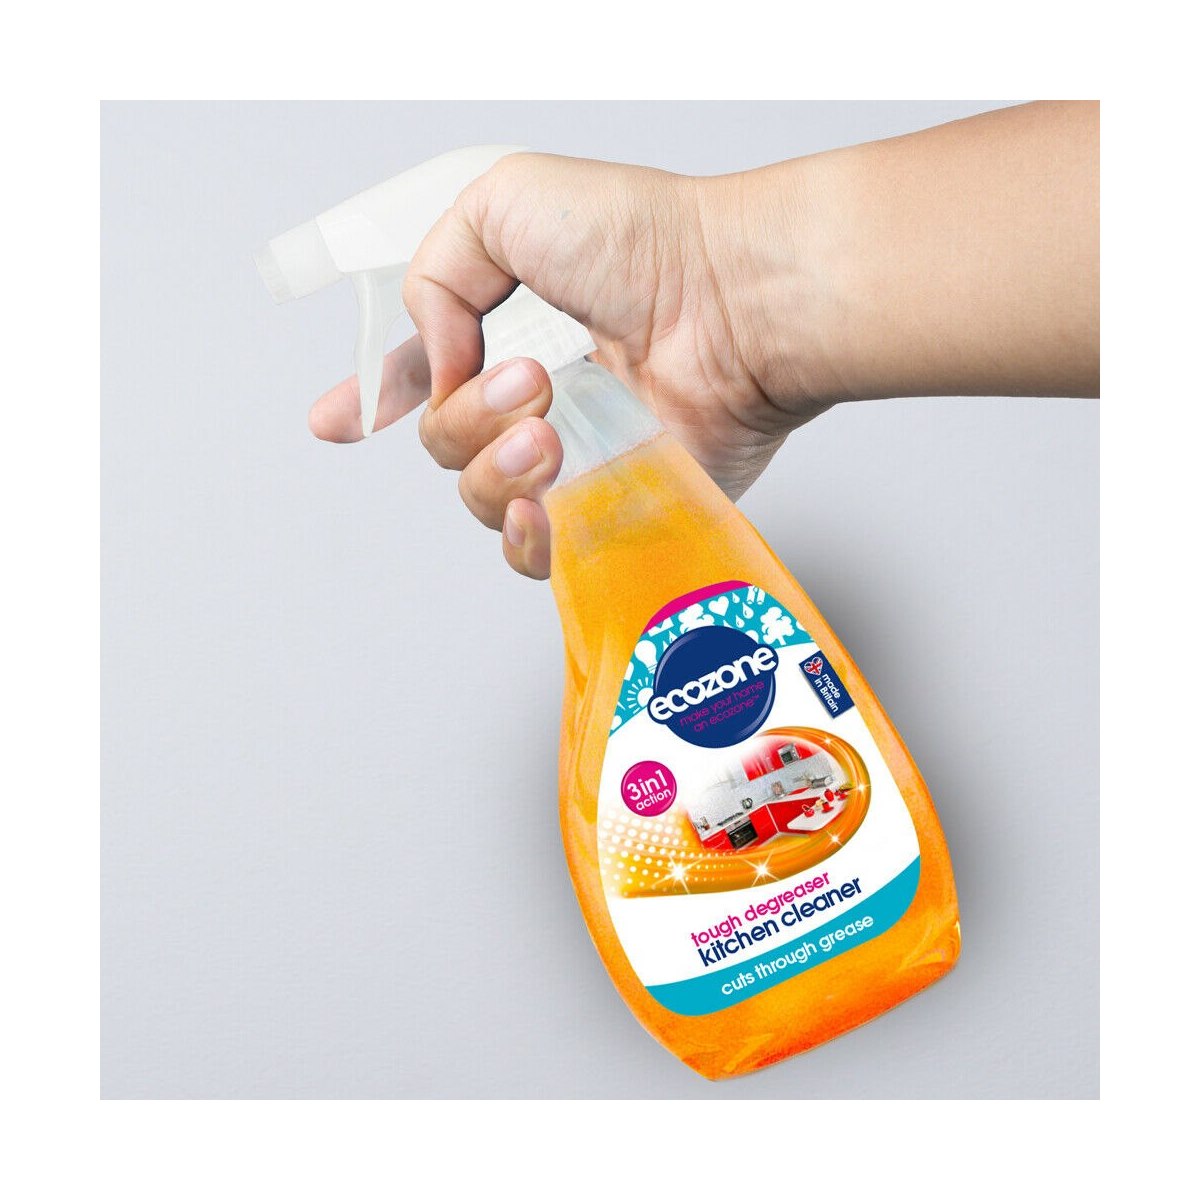 Ecozone 3 in 1 Kitchen Cleaner Tough Degreaser Spray